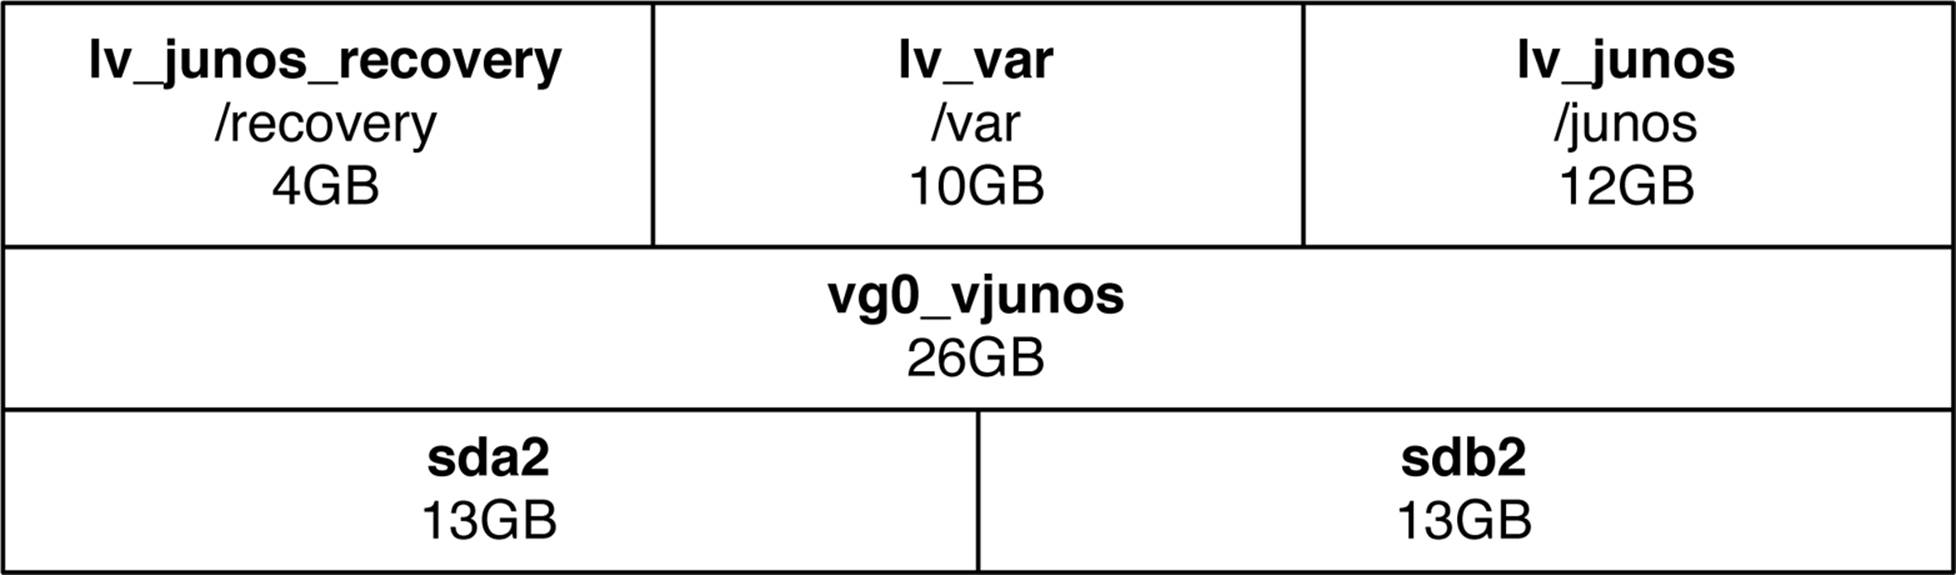 Linux LVM and storage design